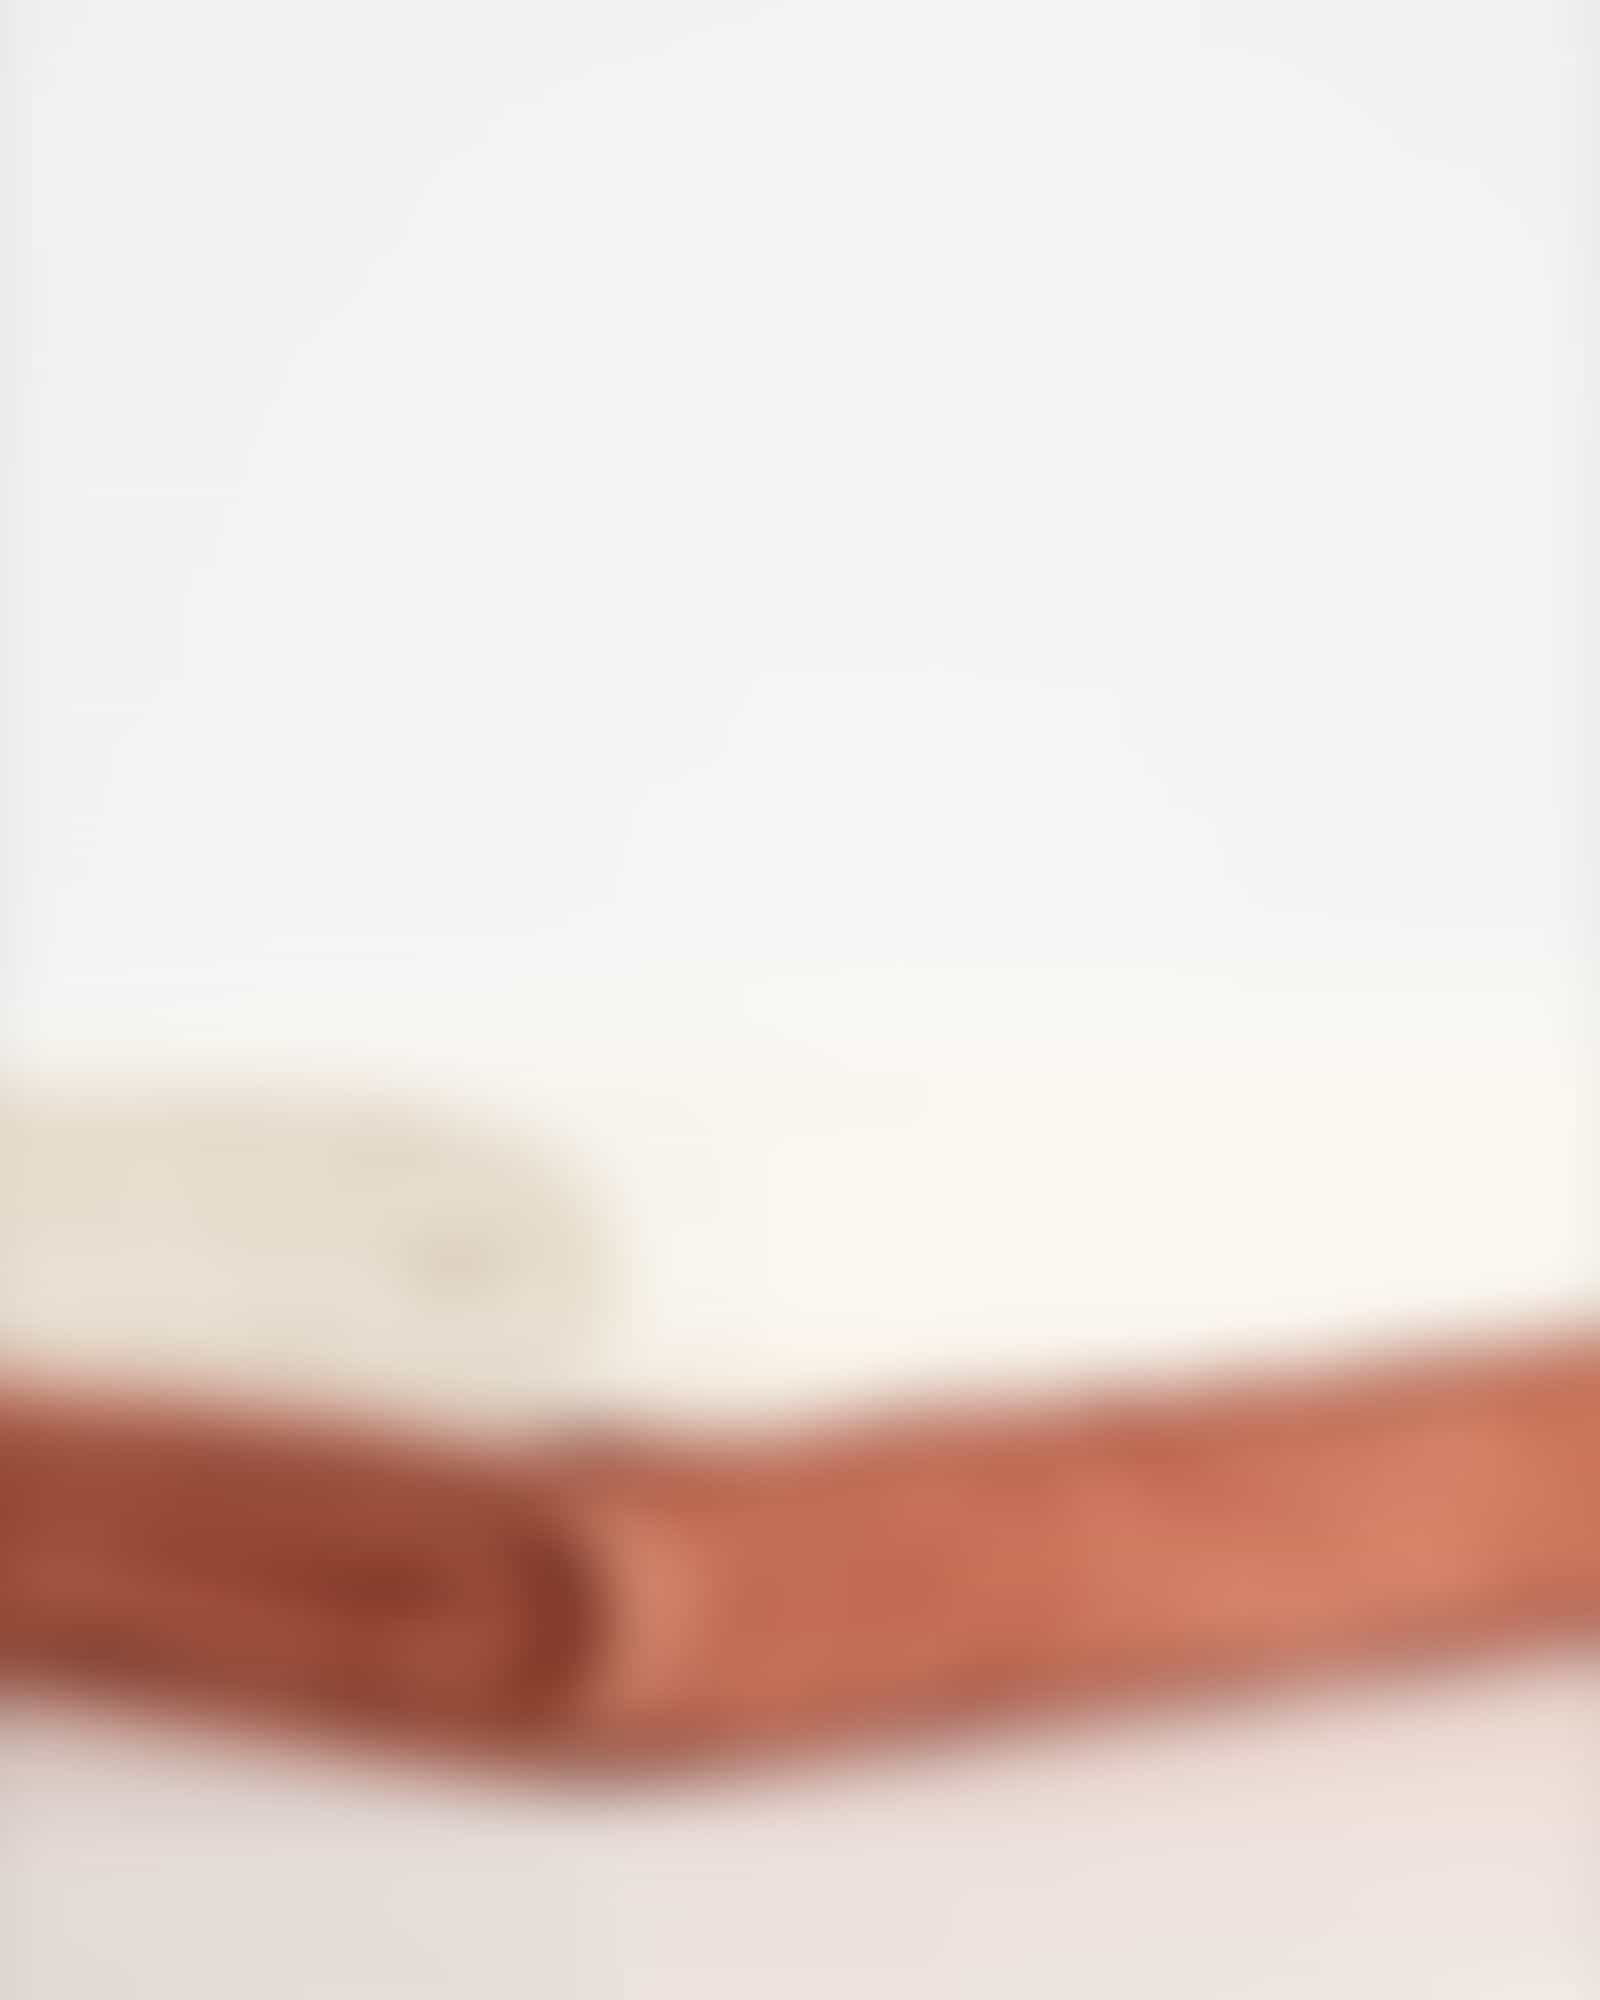 JOOP Uni Cornflower 1670 - Farbe: Kupfer - 384 - Seiflappen 30x30 cm